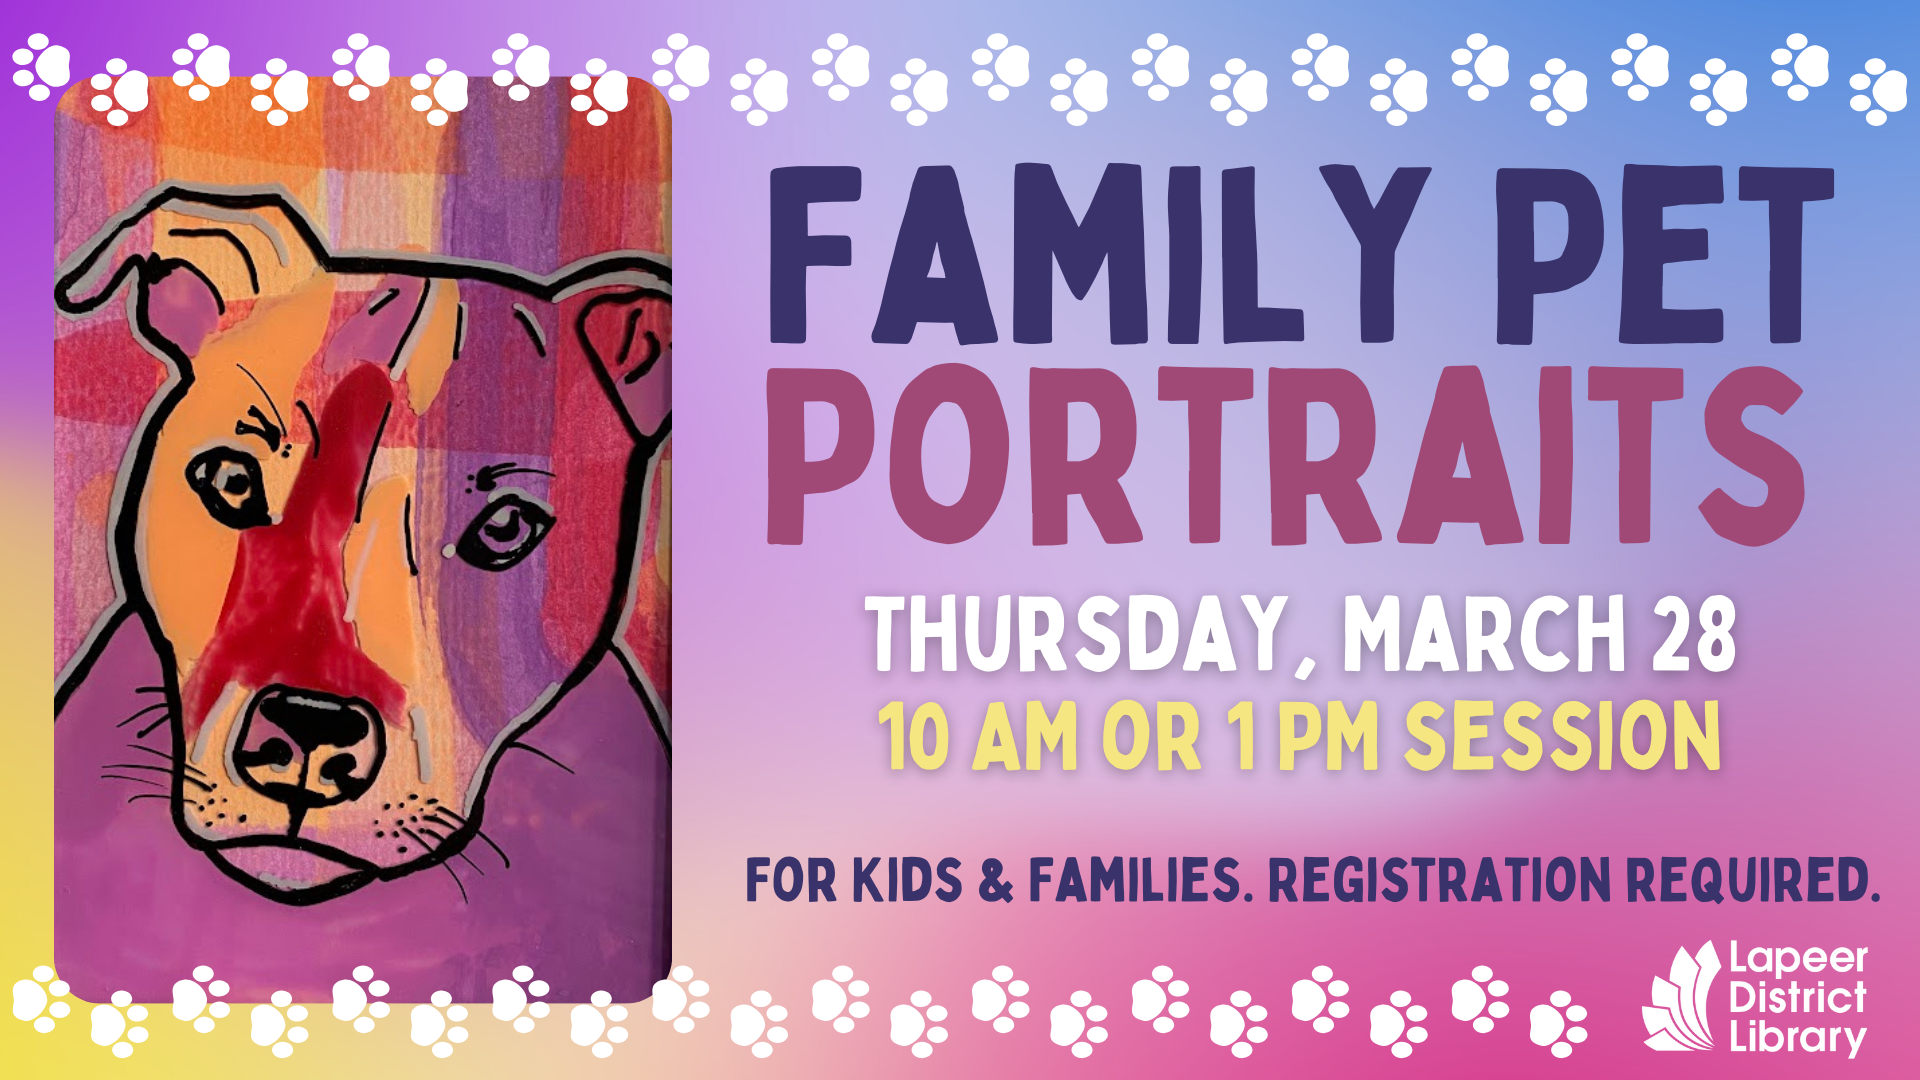 Thursday, March 28 Family Pet Portraits 10 AM or 1 PM session